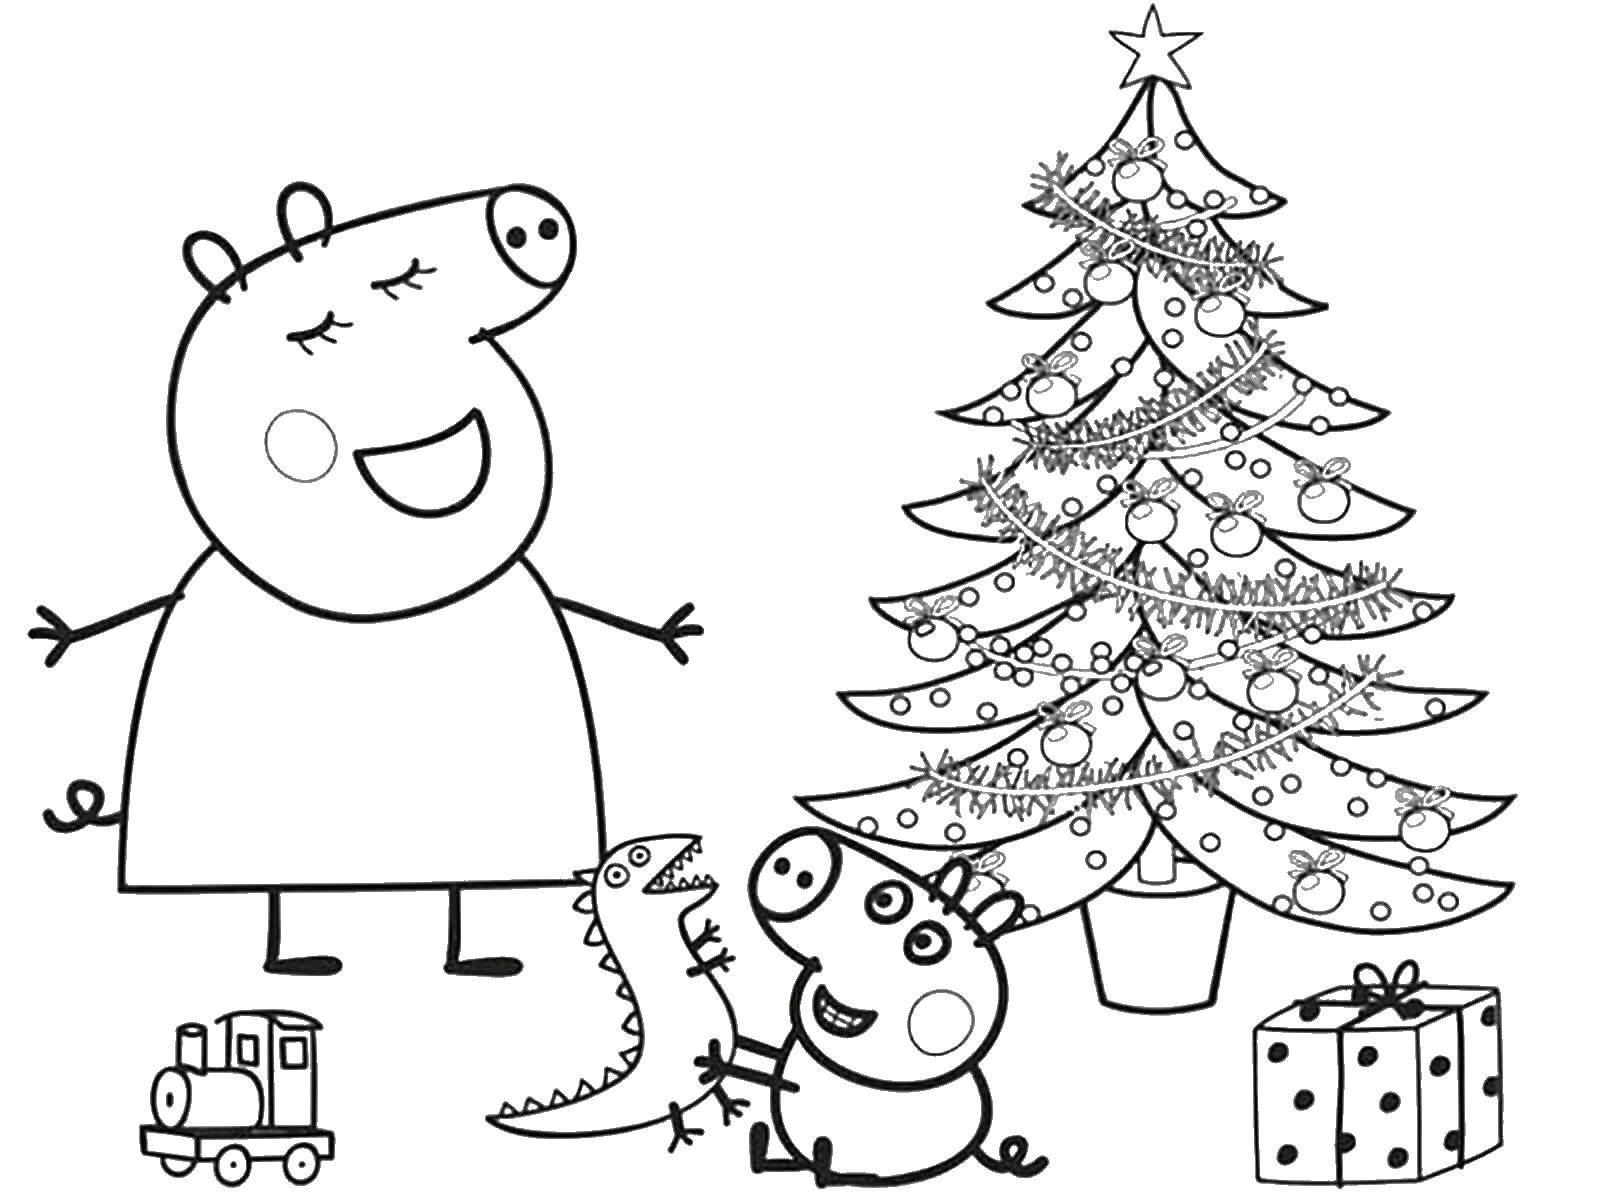 Coloring Peppa pig and Christmas. Category Peppa Pig. Tags:  peppa, Christmas tree, gifts.